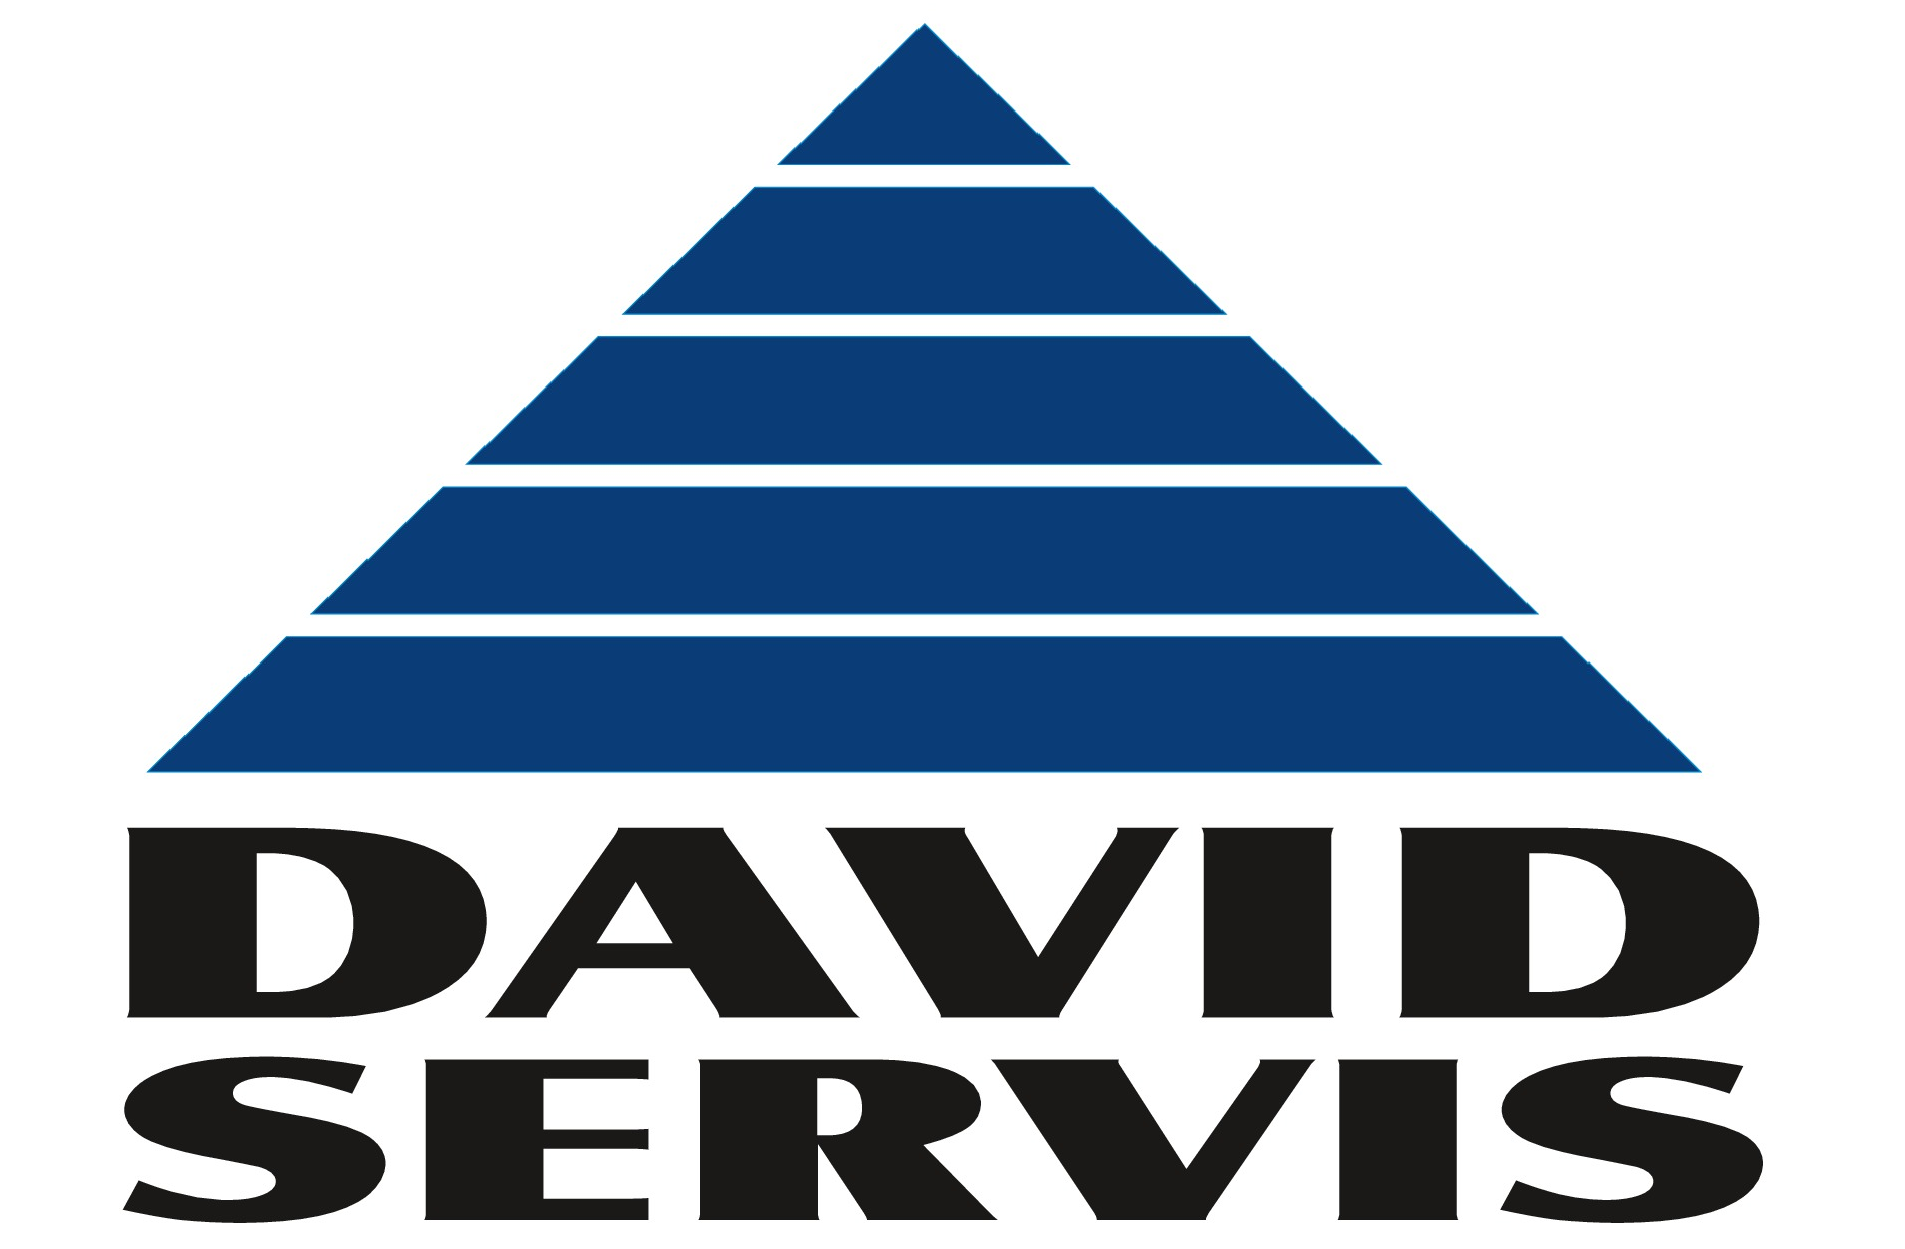 DAVID SERVIS